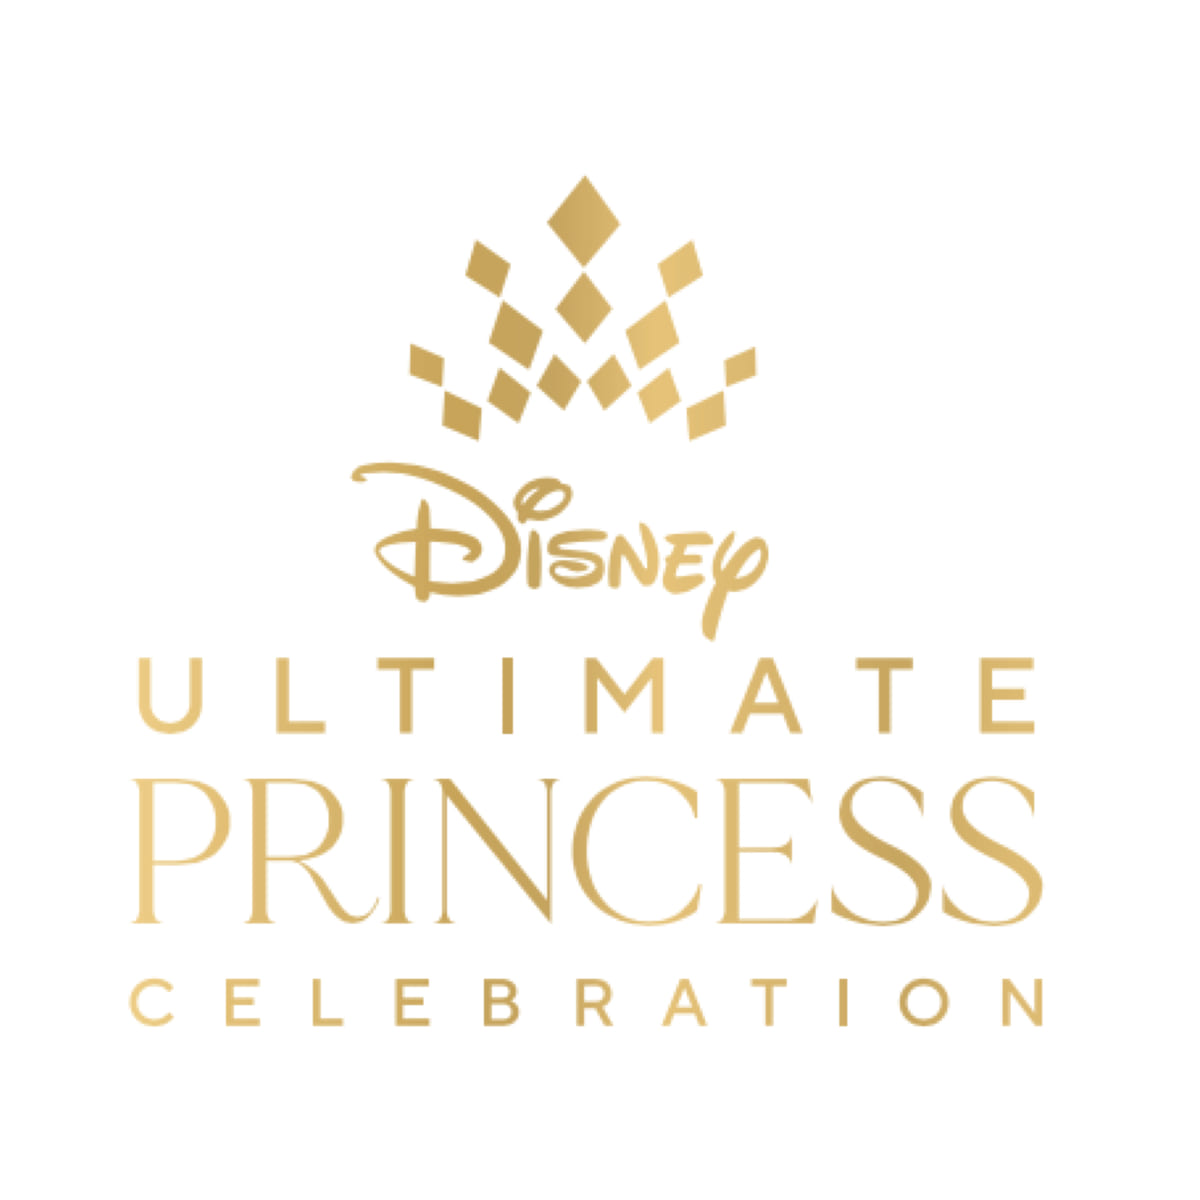 “Ultimate Princess Celebration”